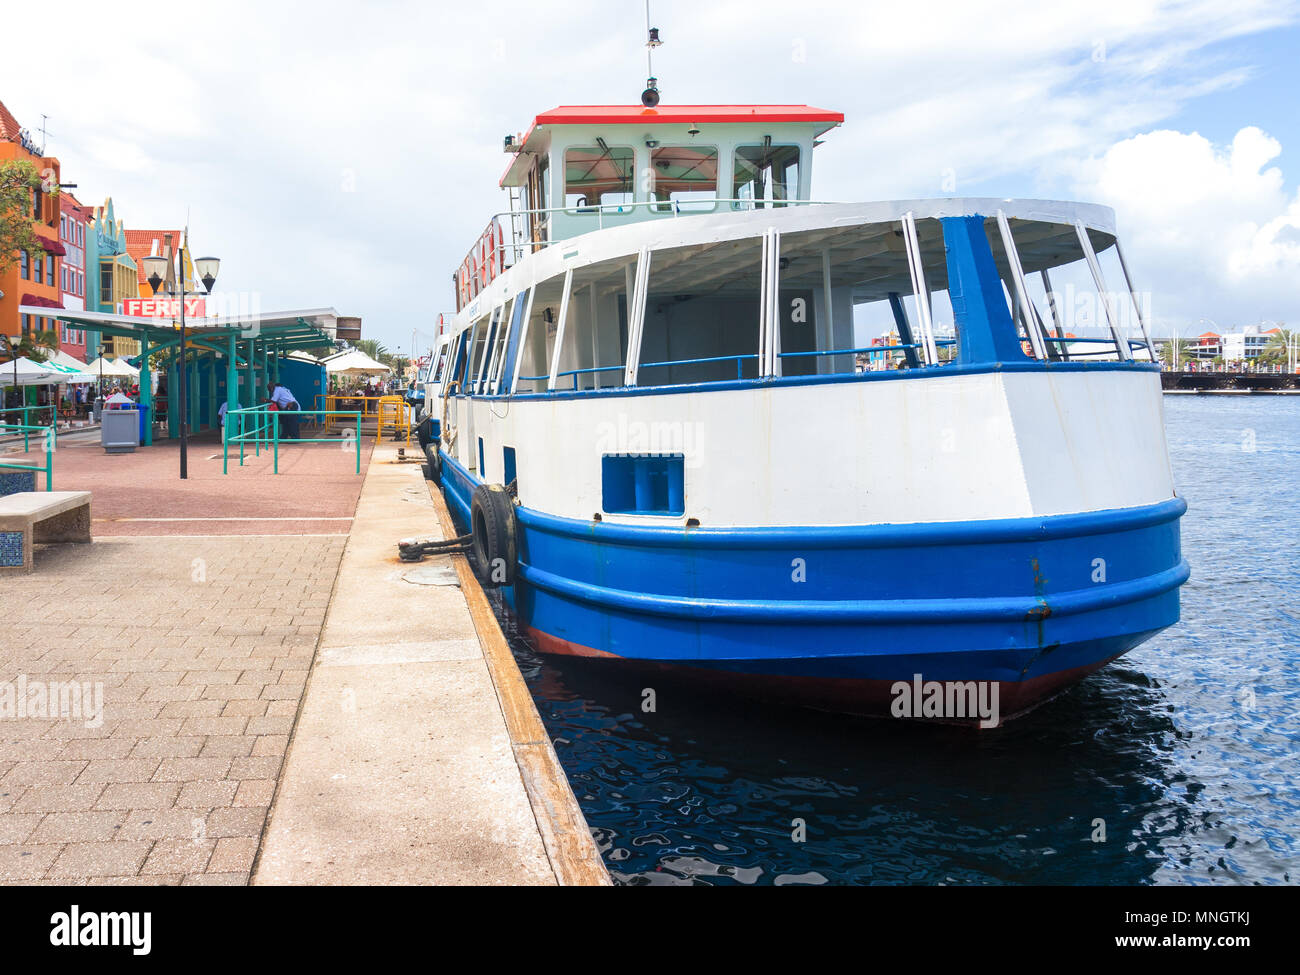 Willemstad, Curacao, 26 Dec 2016 - Ferry In Willemstad Stock Photo